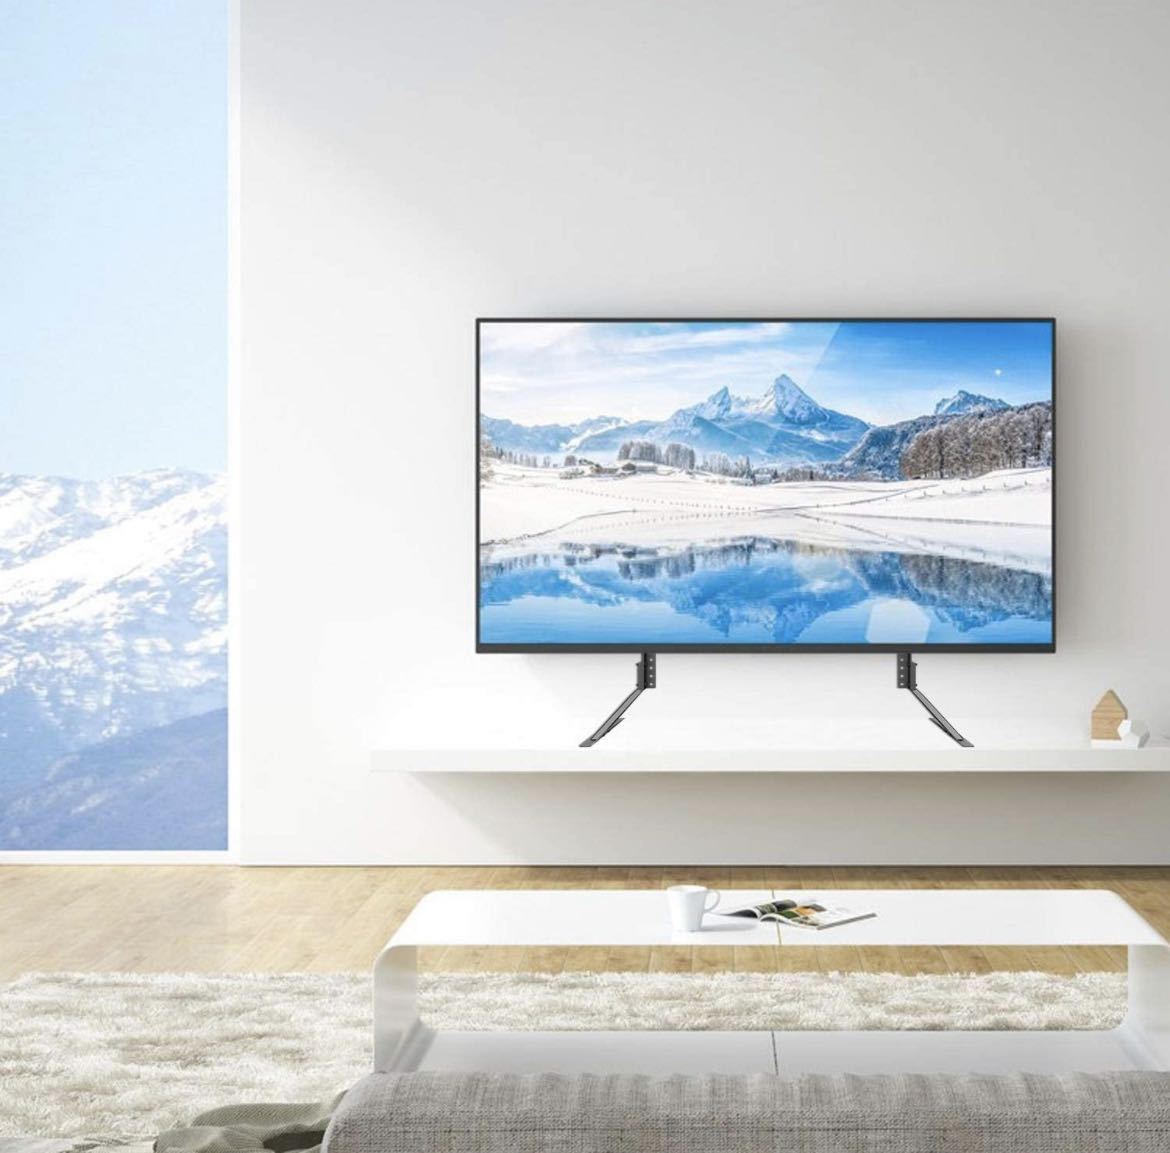 Suptek ユニバーサル LCD 液晶テレビスタンド 汎用 テレビテーブルトップスタンド テレビ台座 22-65インチ対応 耐荷重50kg VESA規格ML1760_画像6